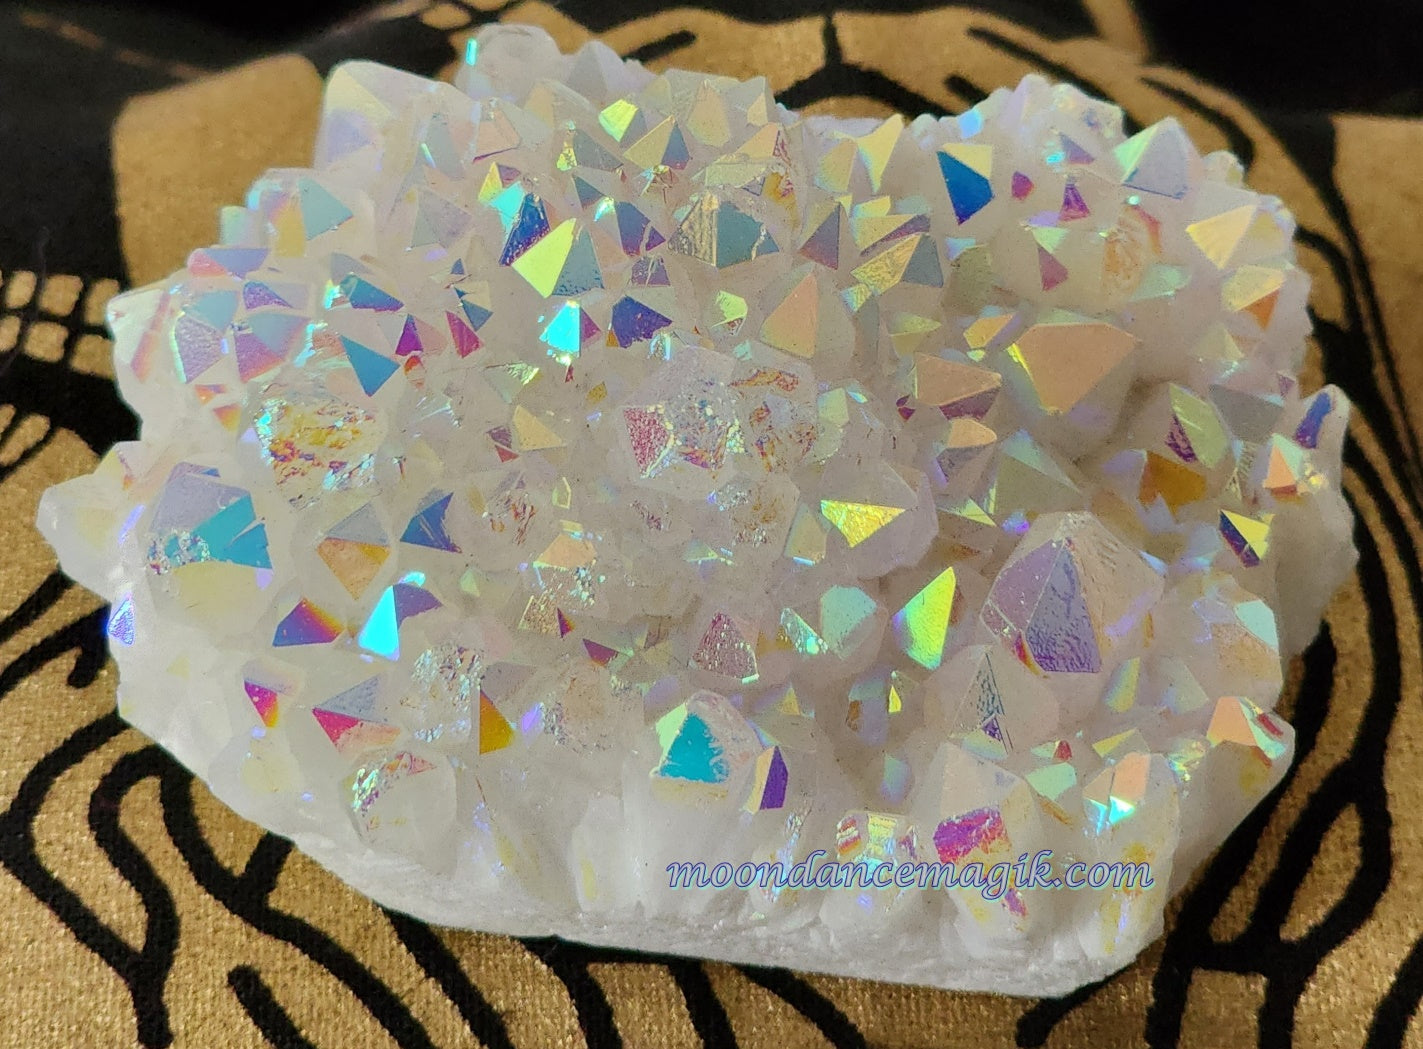 Beautiful Healing Stone Titanium Coated AB Crystal Cluster Geode Druzy Specimen